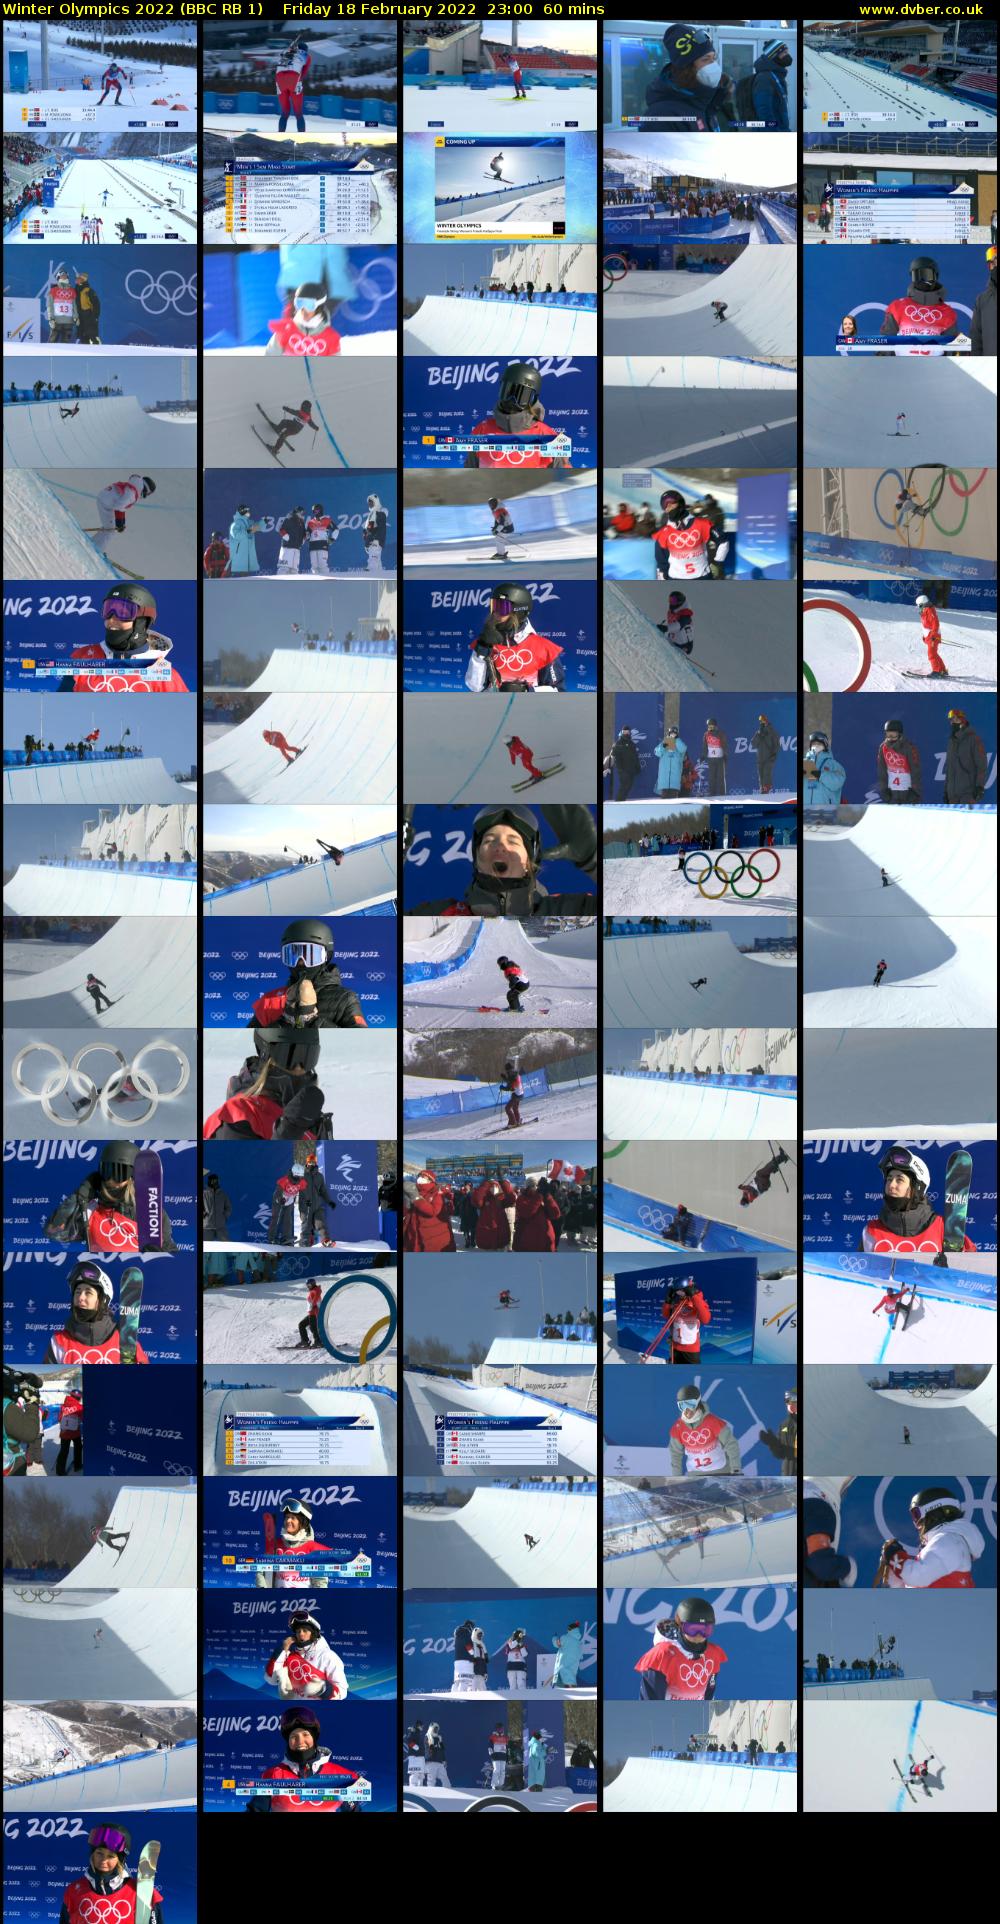 Winter Olympics 2022 (BBC RB 1) Friday 18 February 2022 23:00 - 00:00